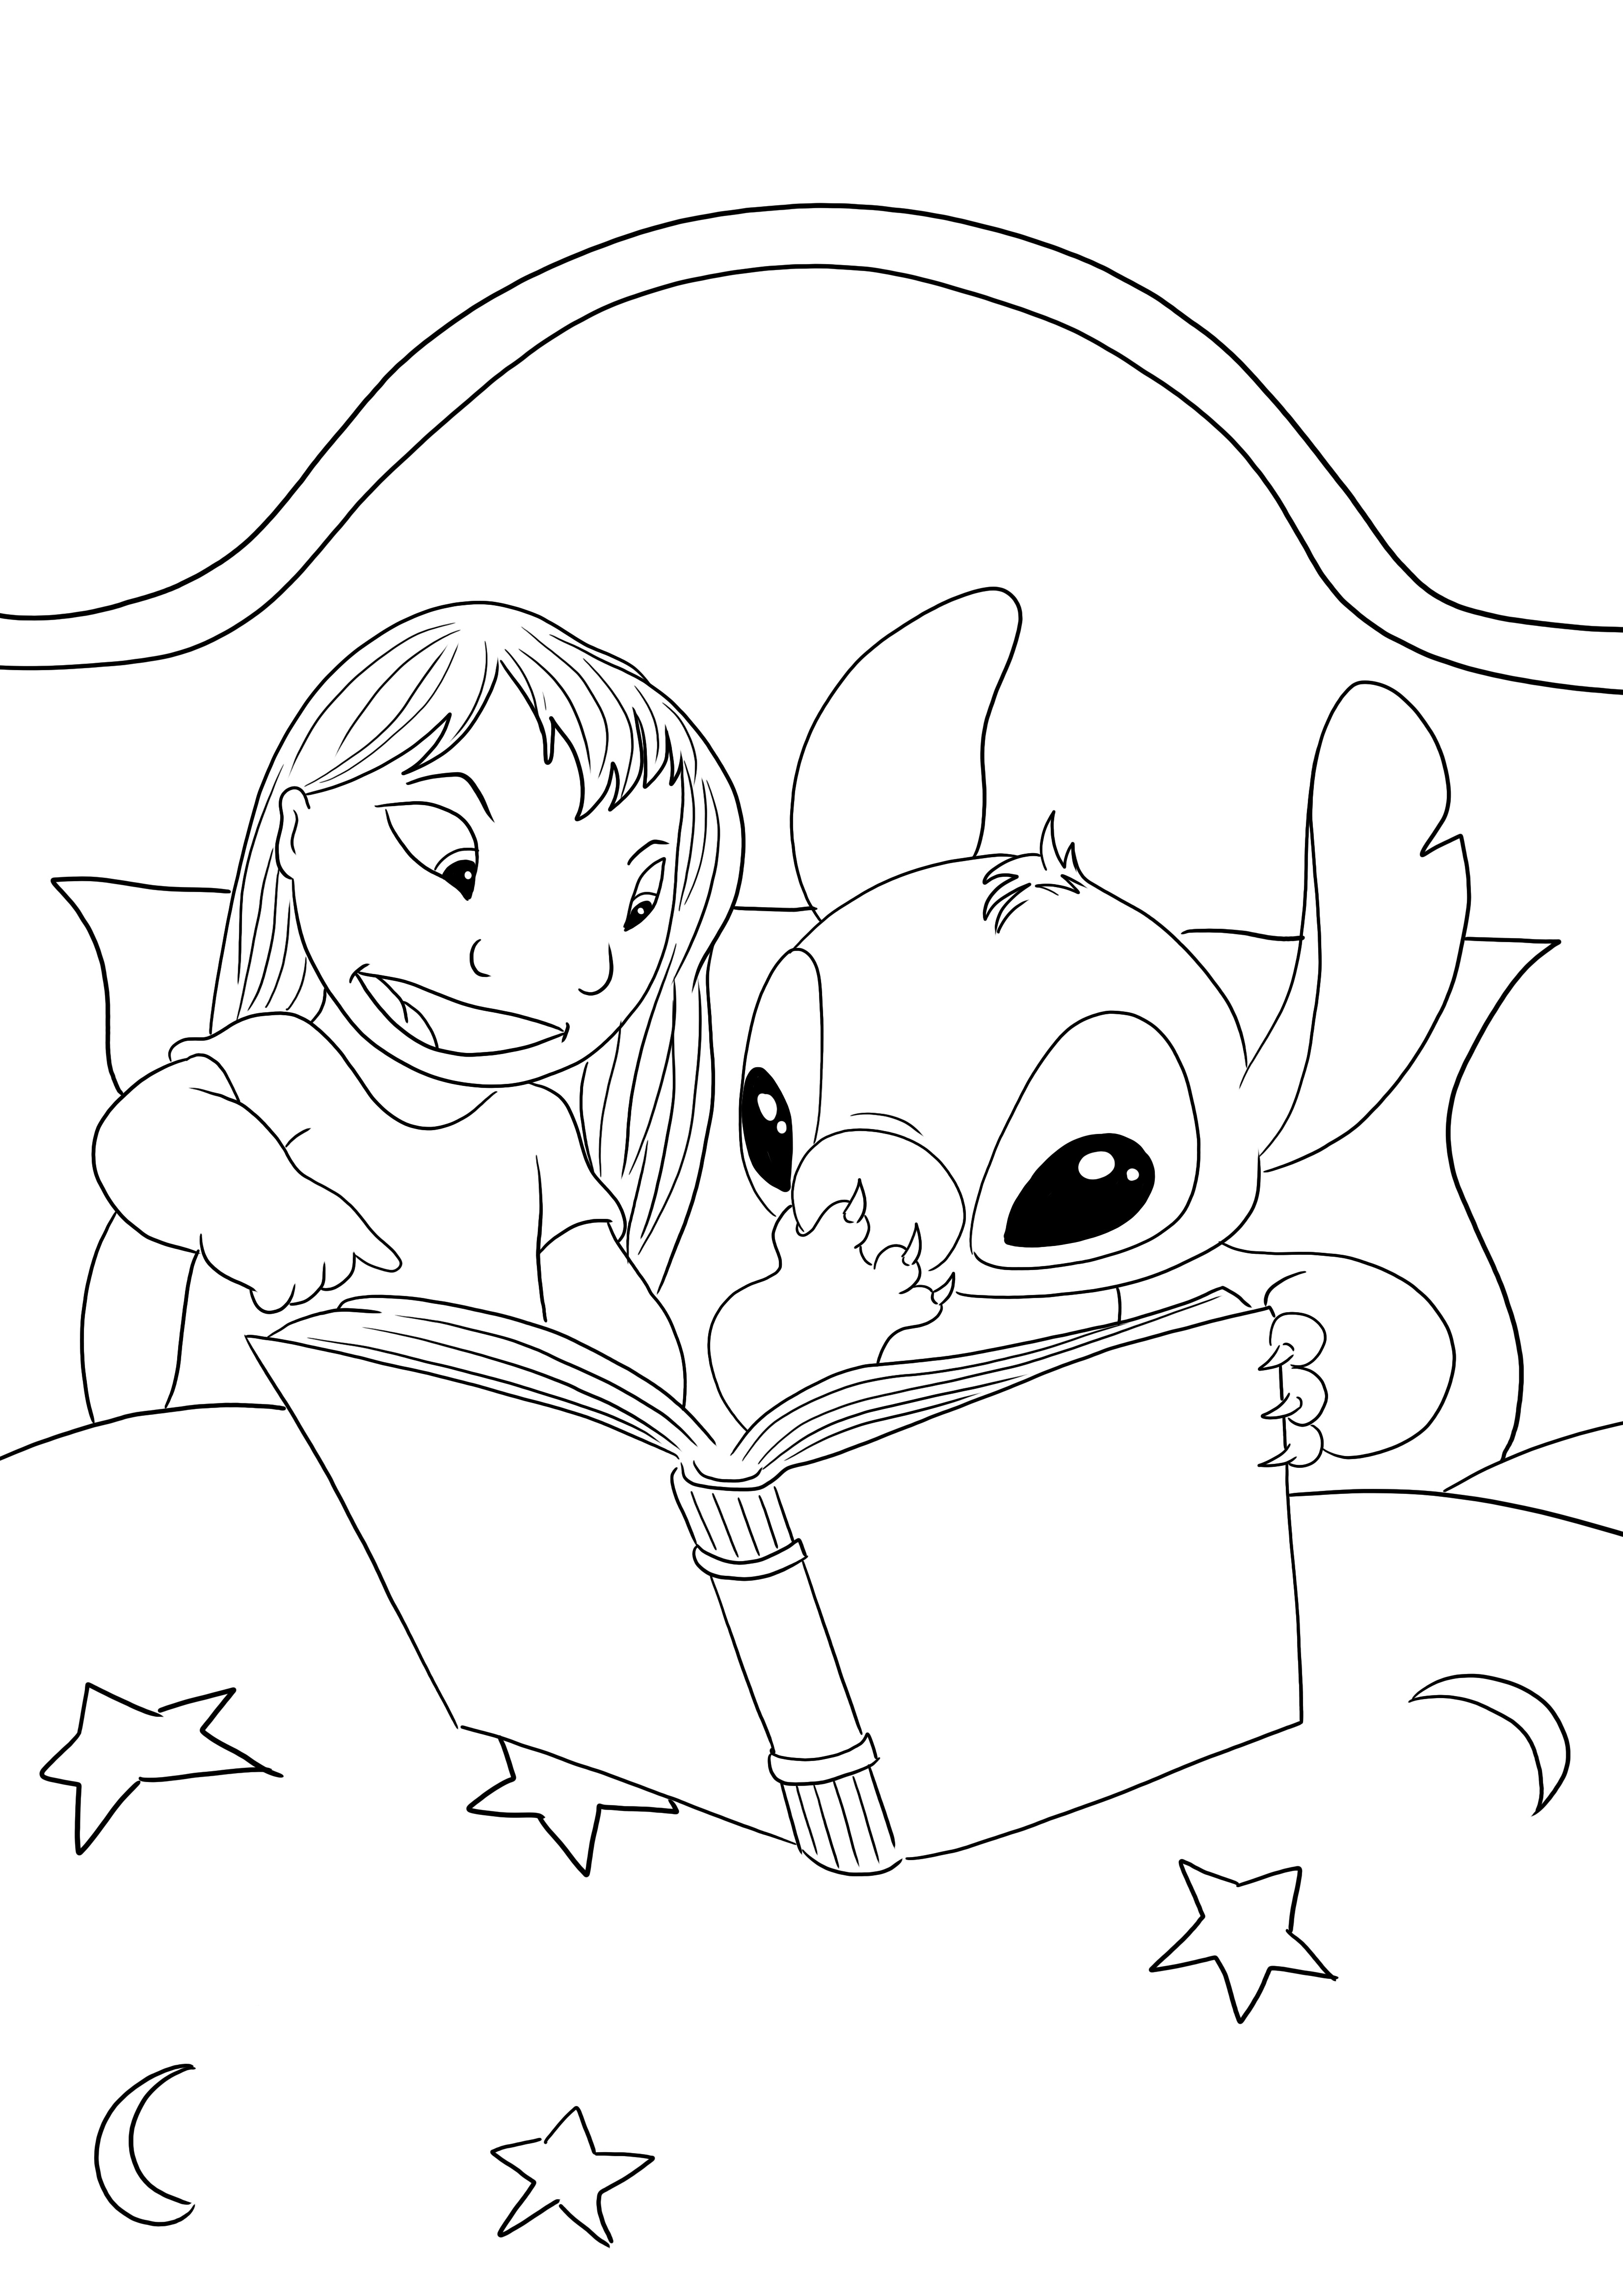 Lilo&Stitch leyendo la historia de la noche para colorear e imprimir imagen gratis